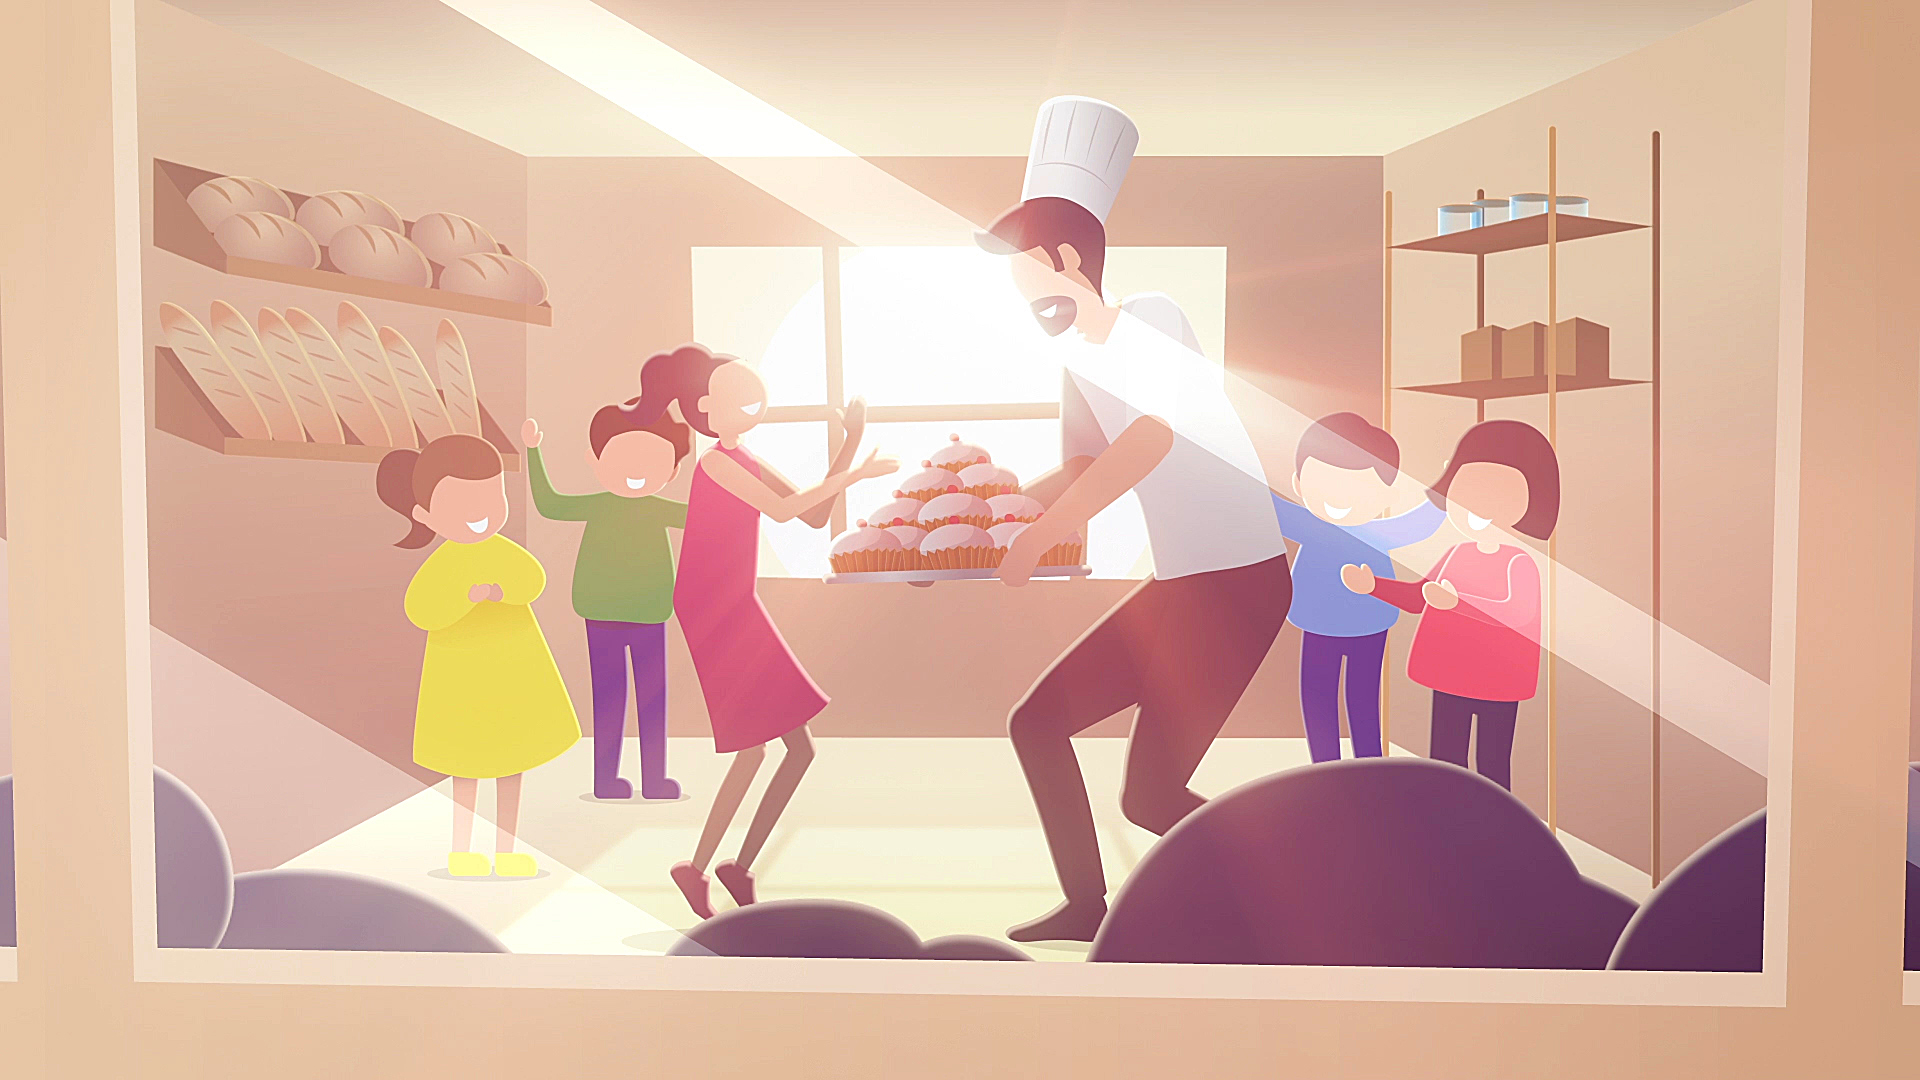 ‘The Baker & The Robot’ 2d Explainer Animation